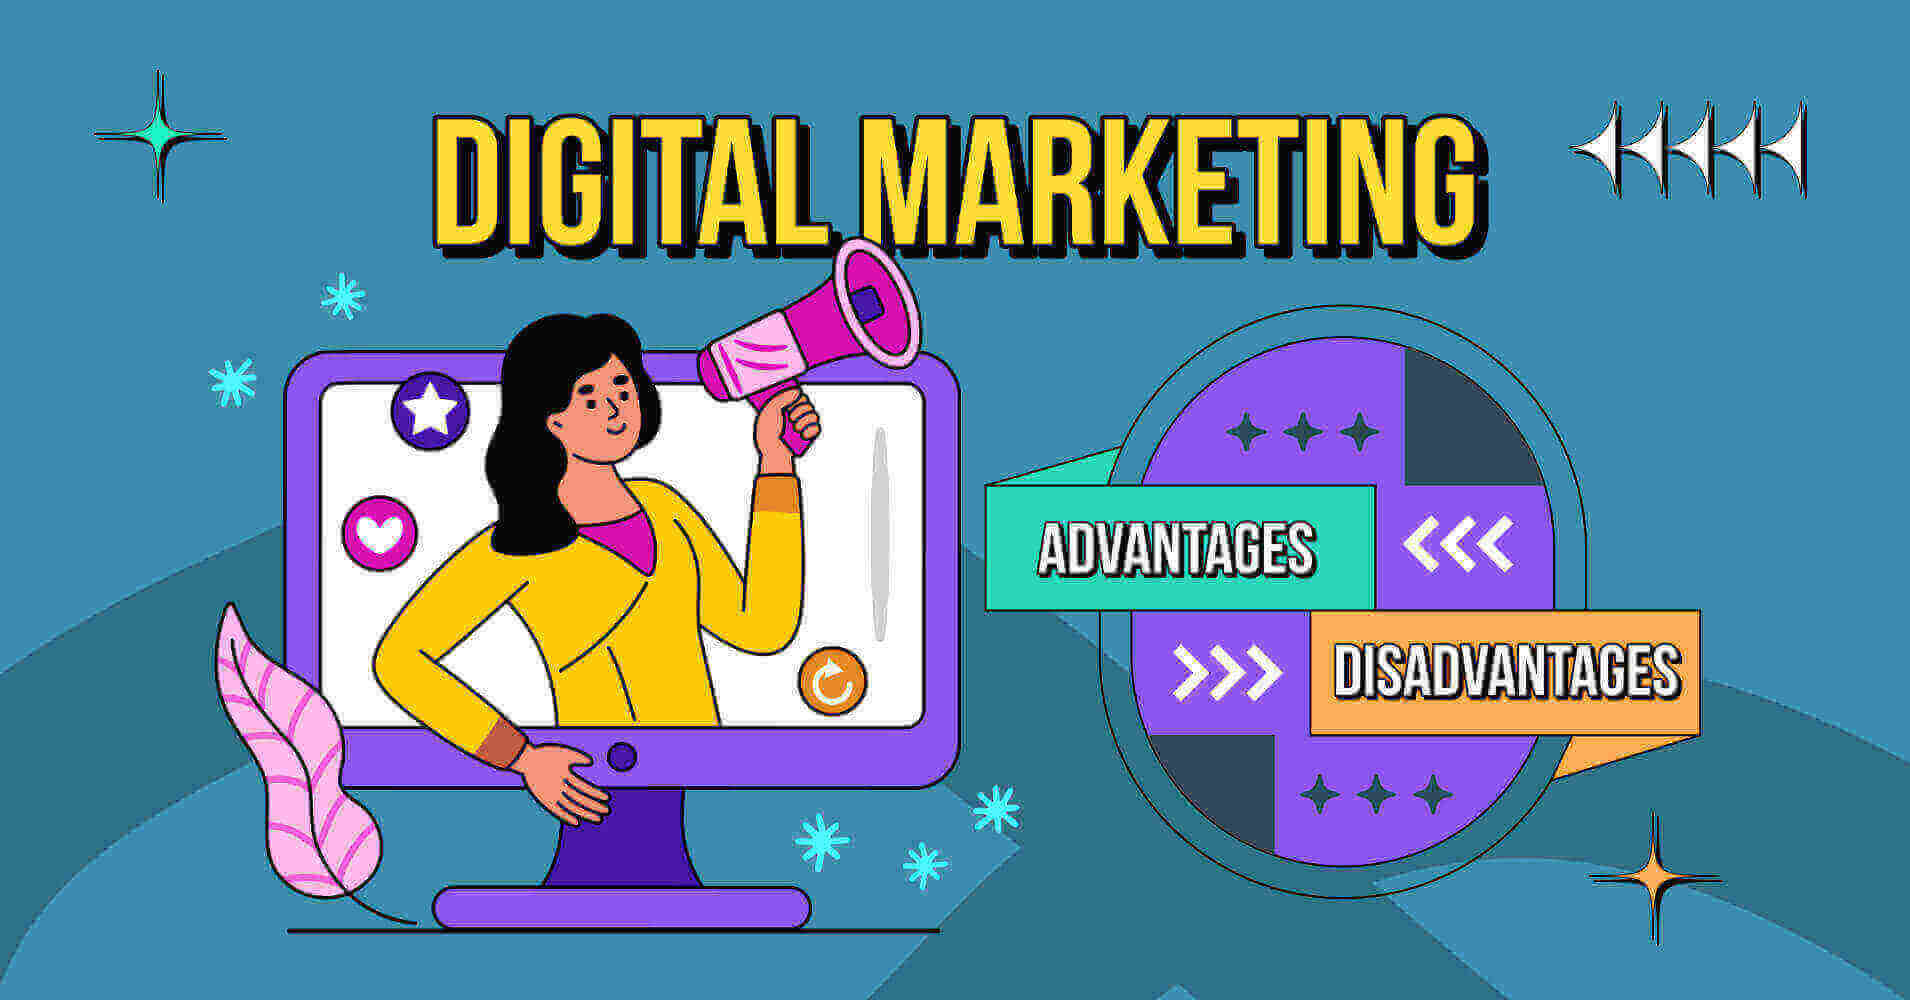 Digital-Marketing-Advantages-and-Disadvantages.jpg